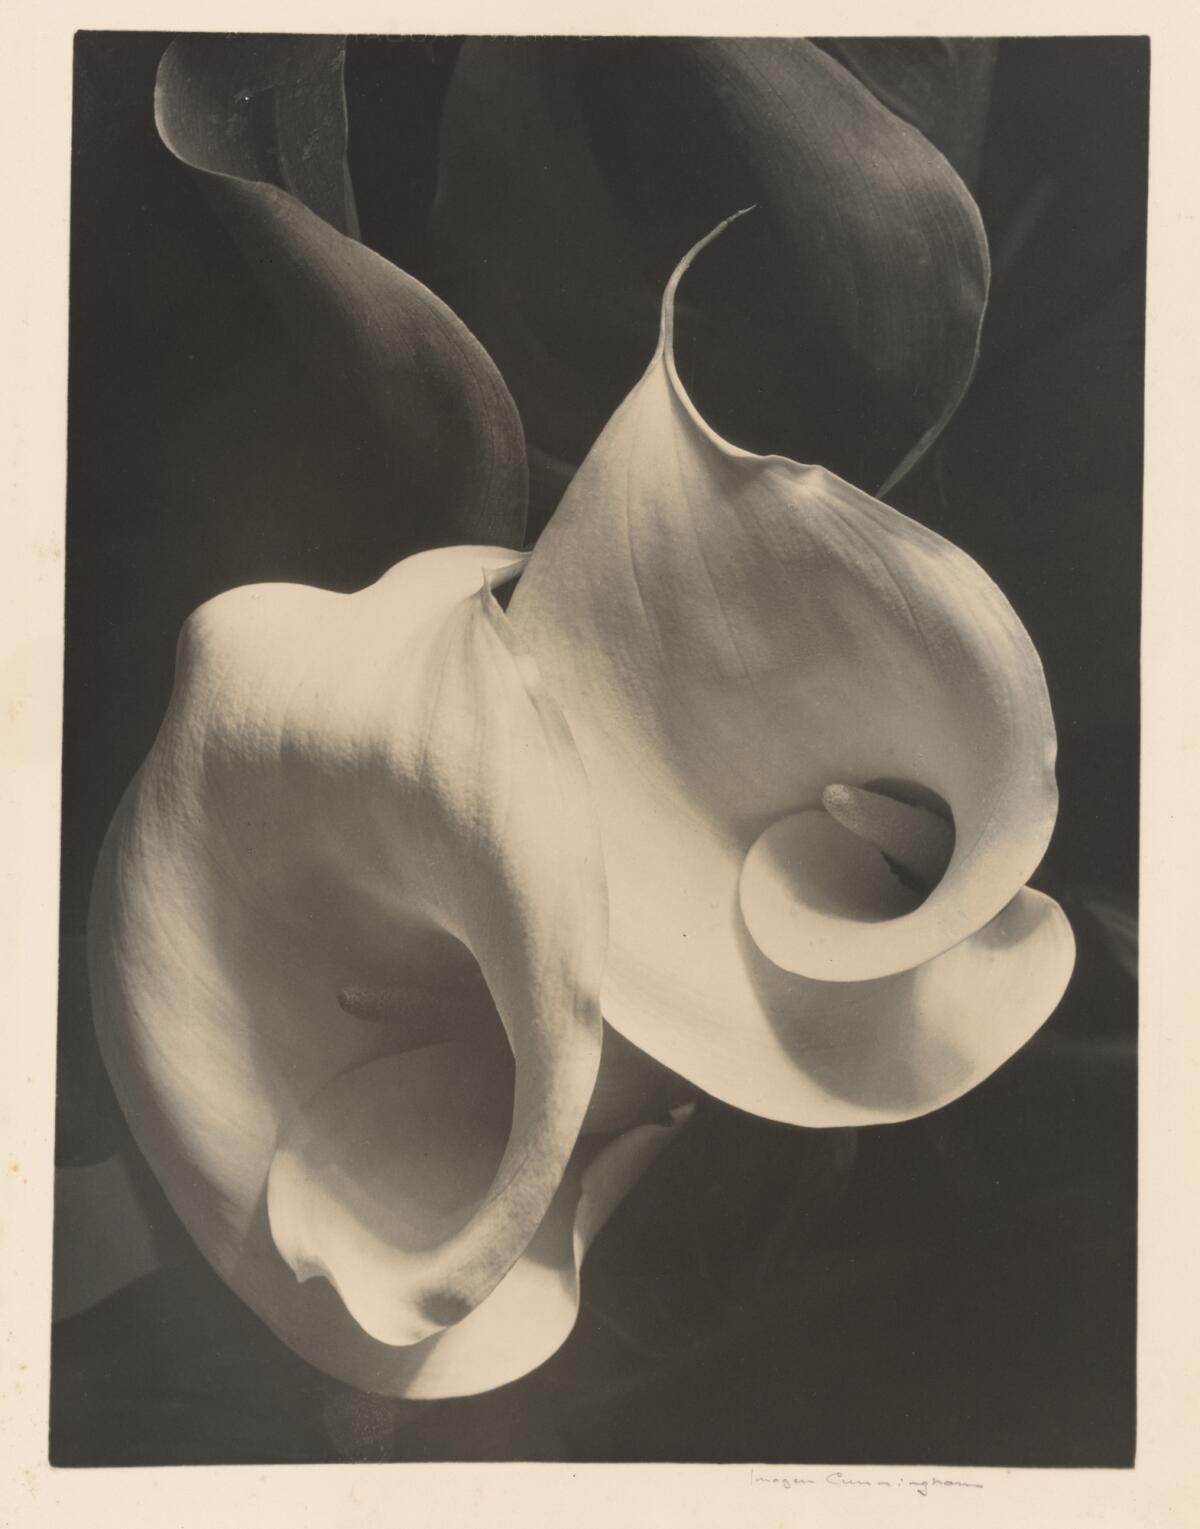 Imogen Cunningham, "Two Callas," 1925-29, gelatin silver print.